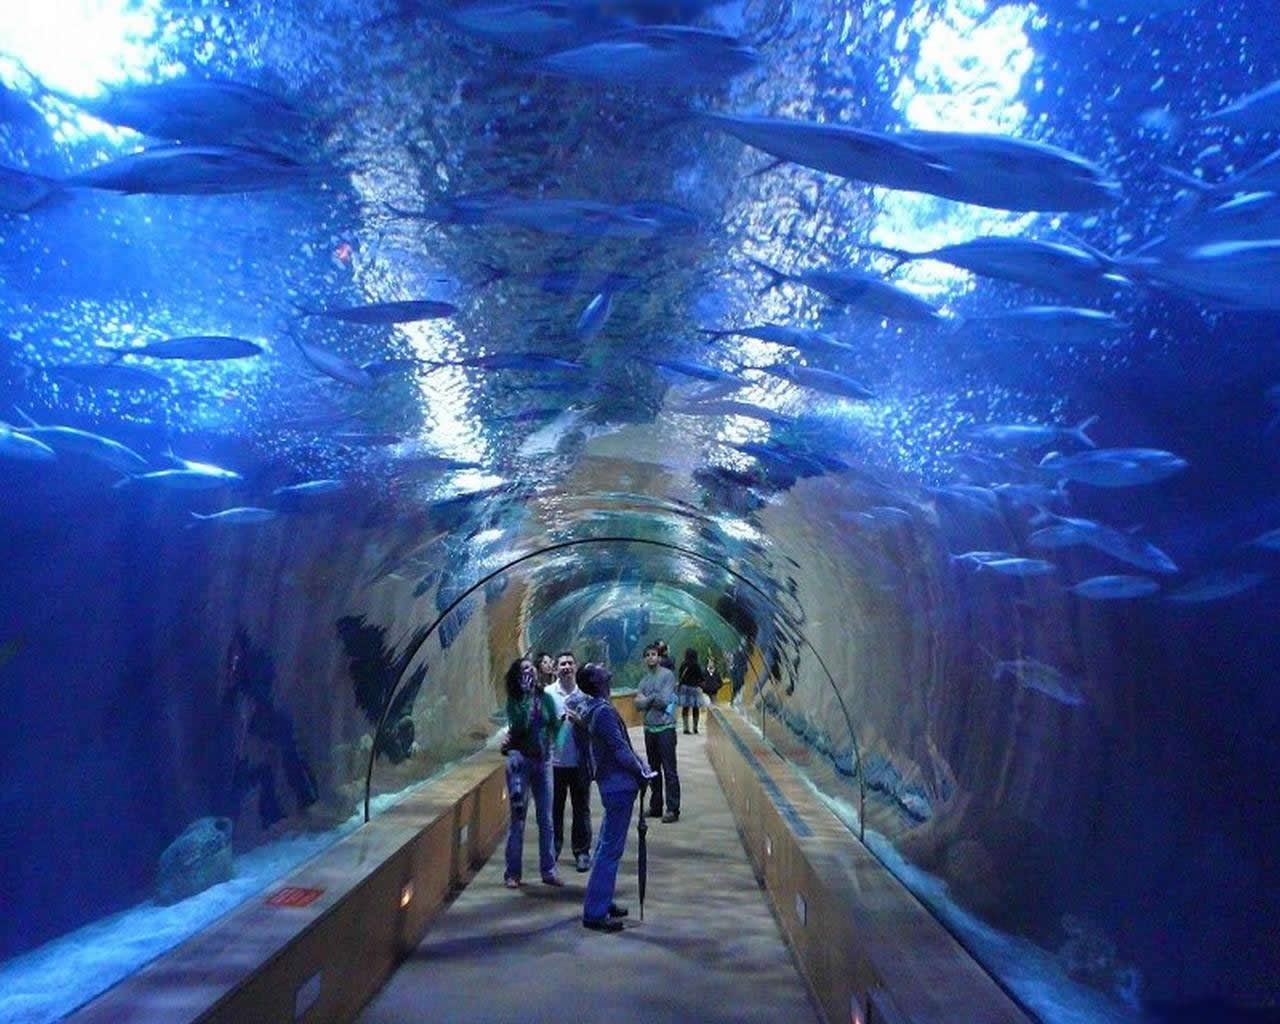 tapete aquario,aquarium,tunnel,unter wasser,welt,touristenattraktion